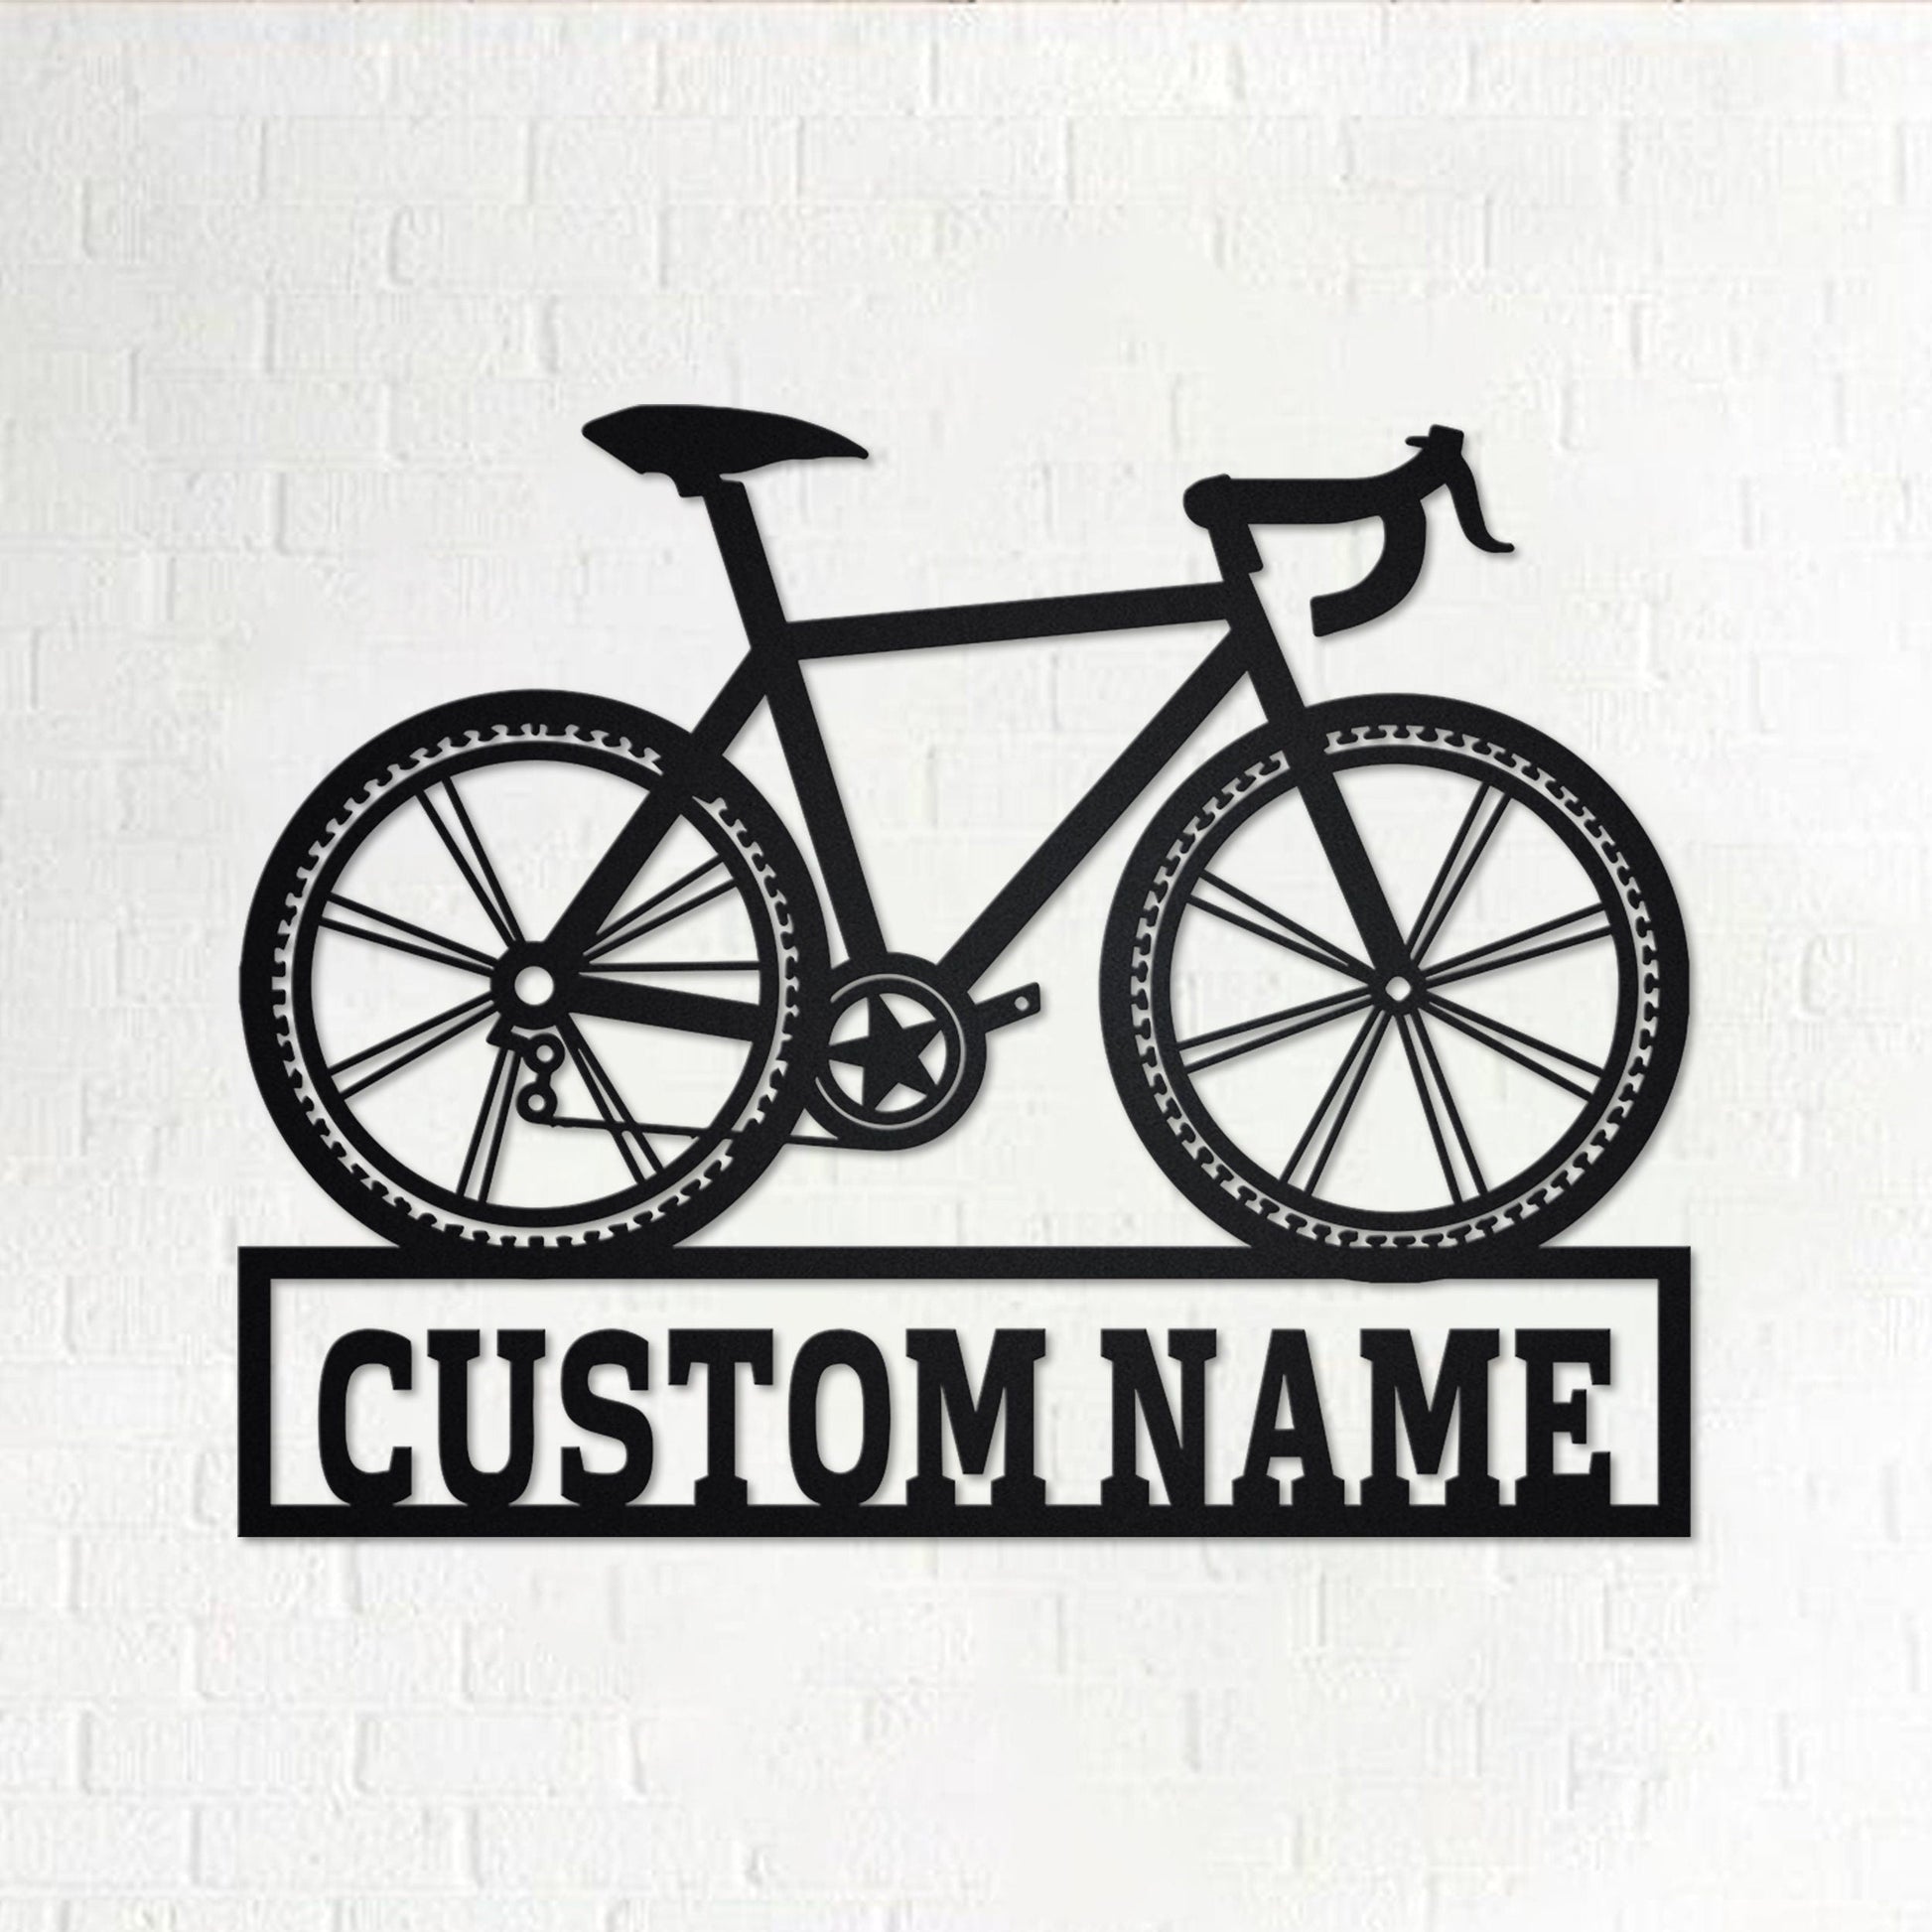 Personalized Bicycle Metal Sign - Bicycle Metal Wall Art - Bicycle Metal Wall Decor - Bicycle Lover - Custom Bicycle